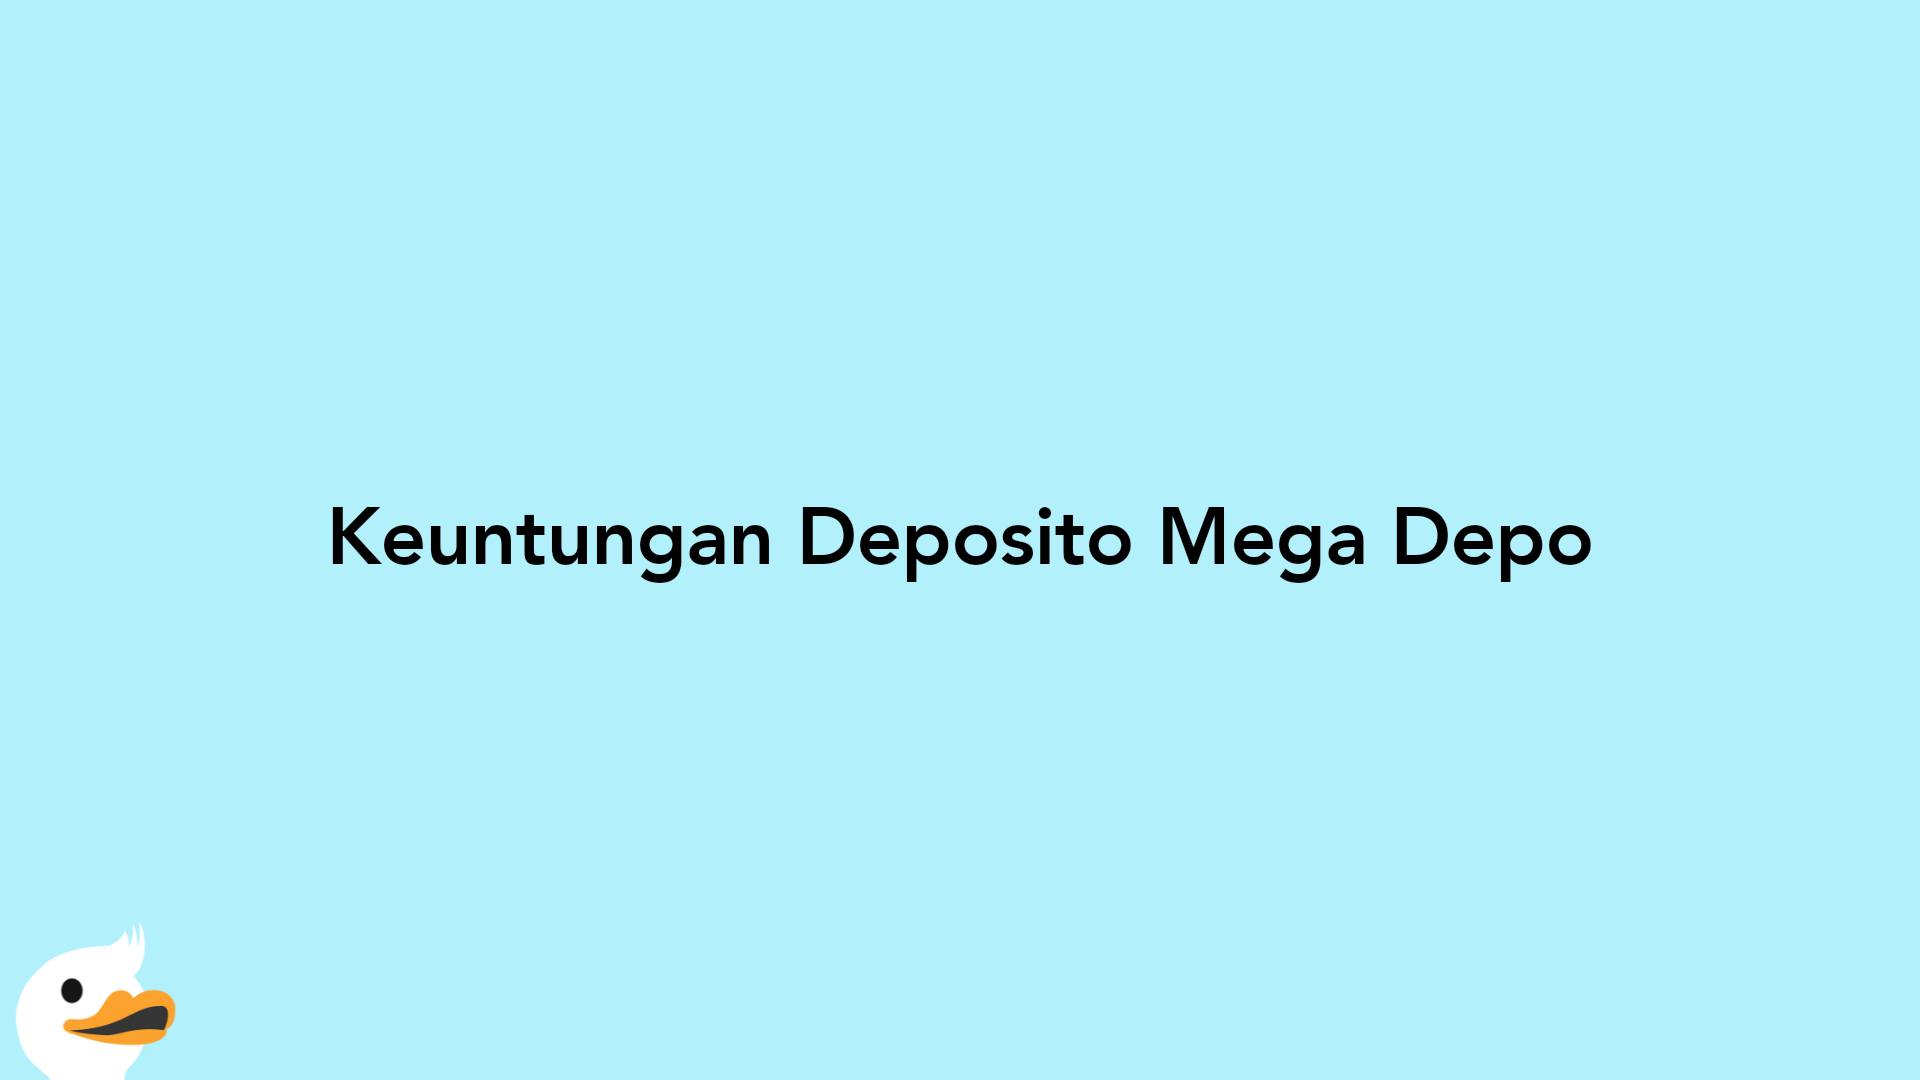 Keuntungan Deposito Mega Depo